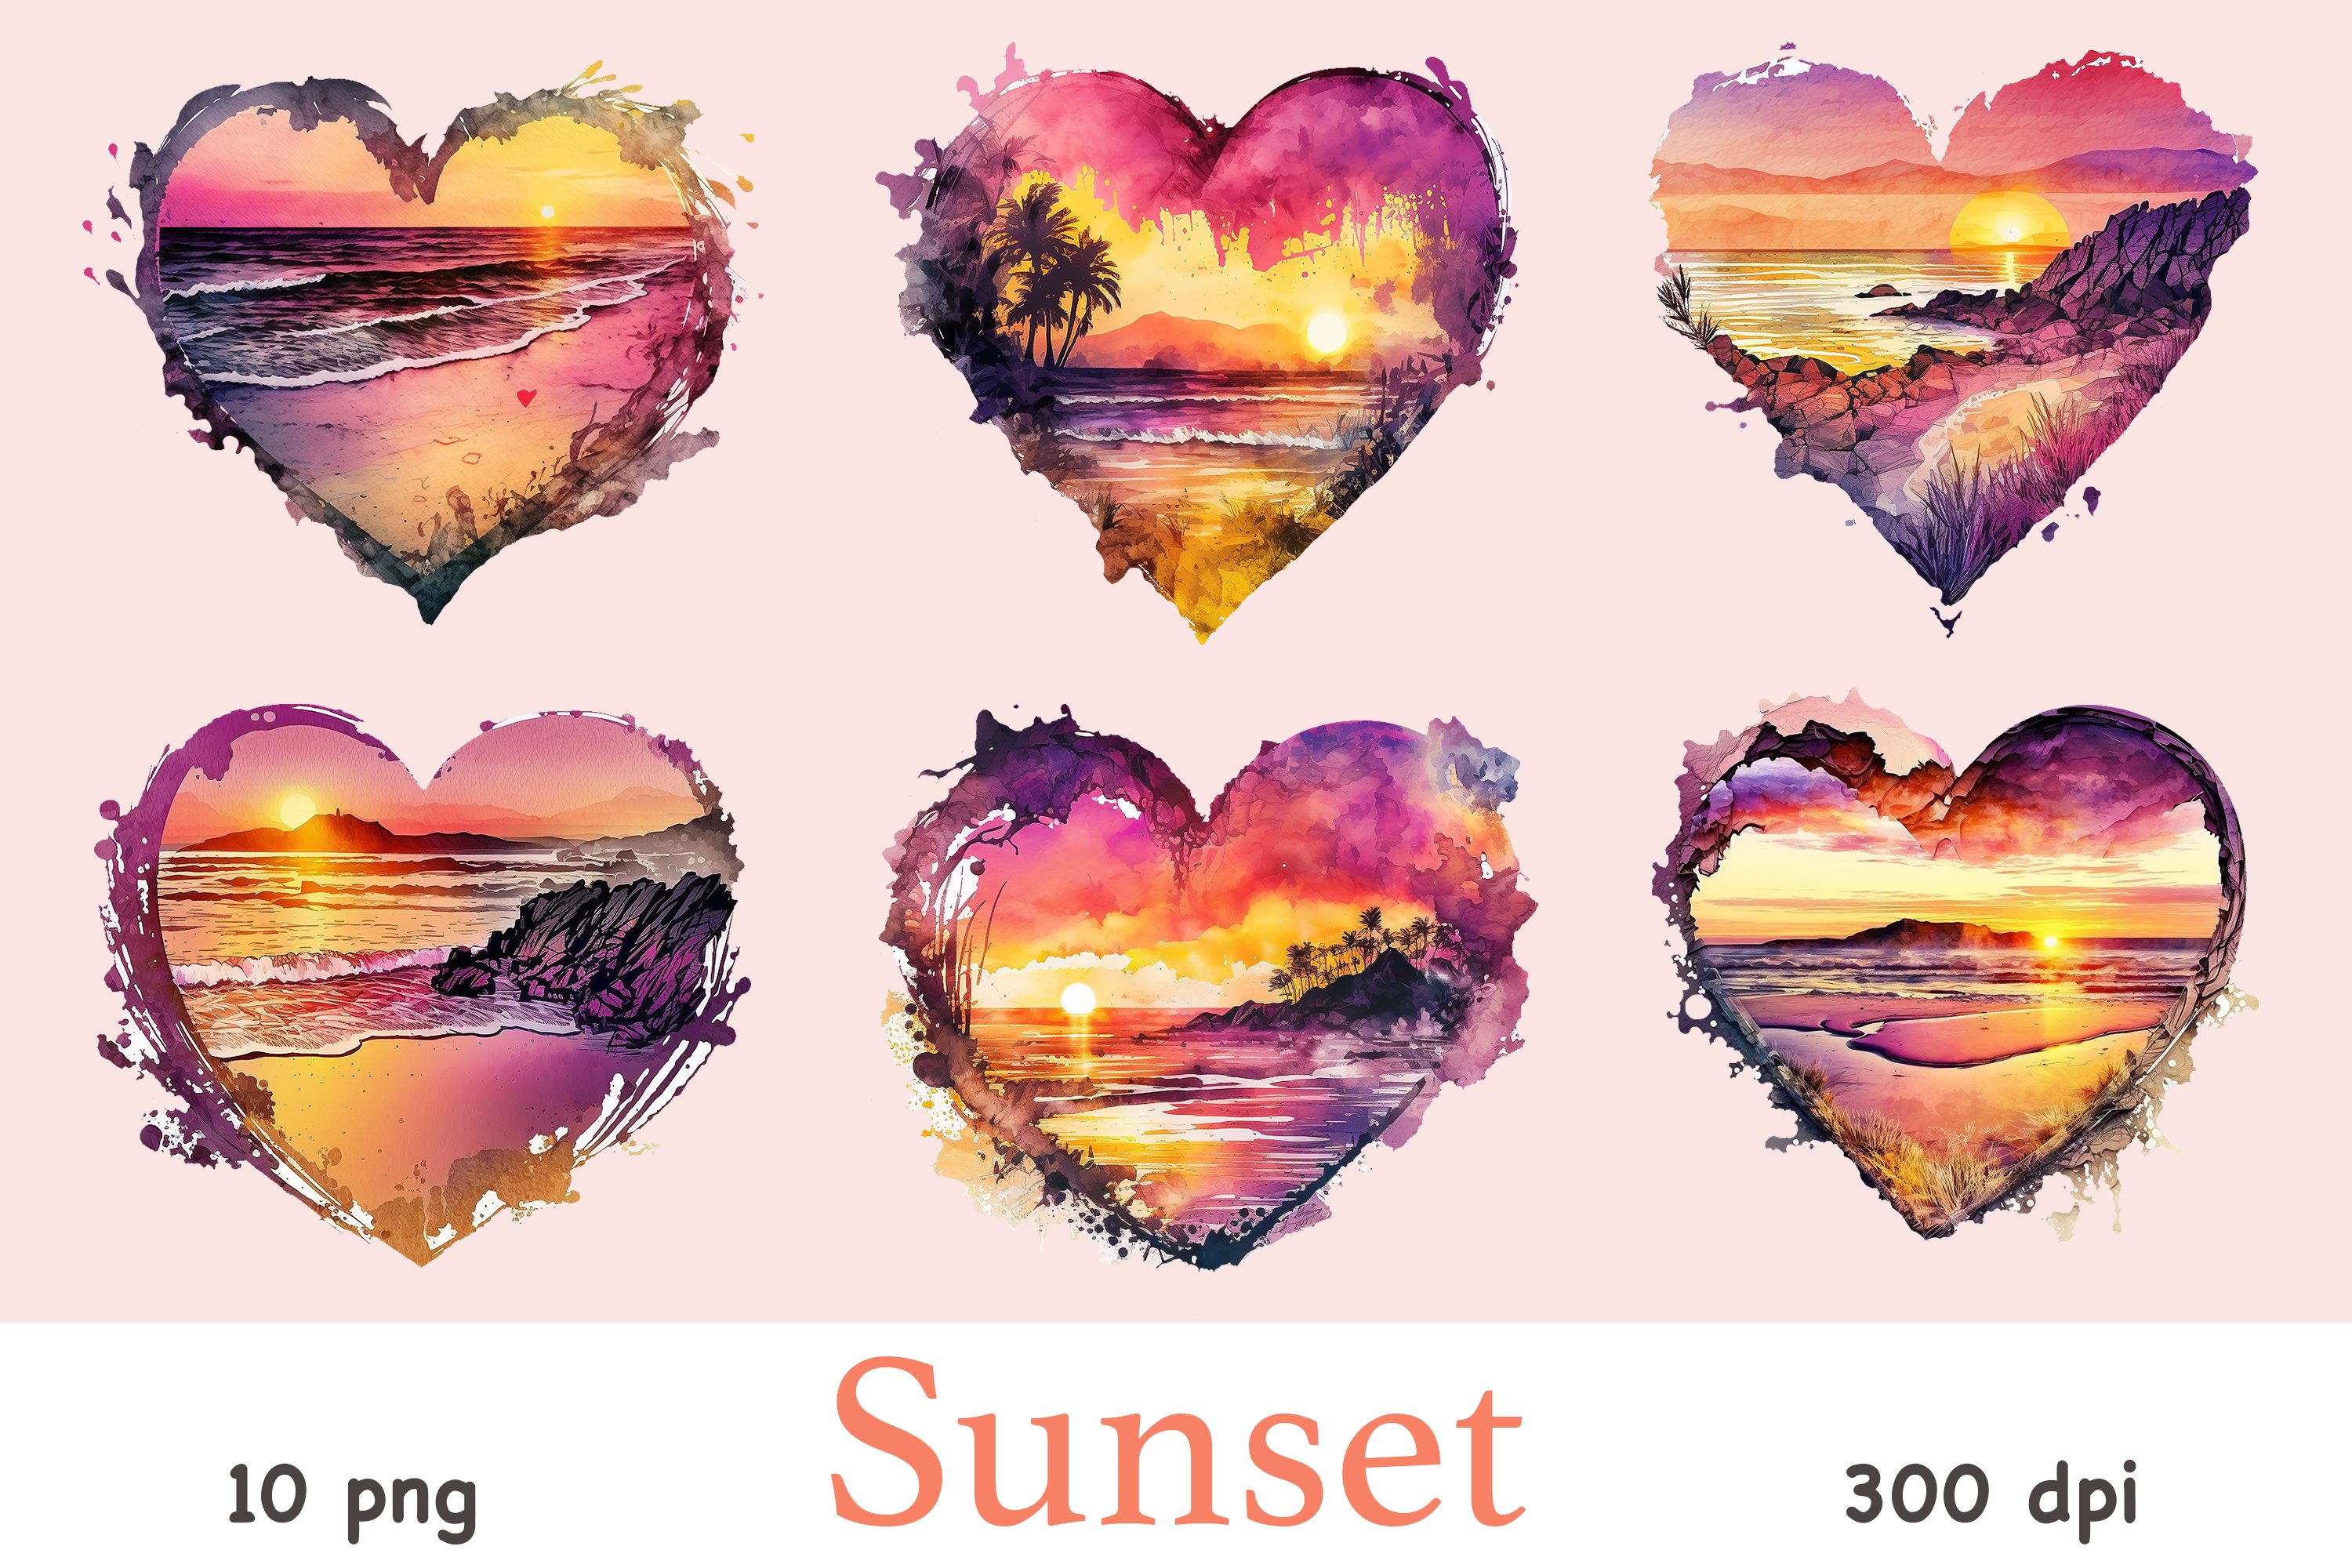 Sunset Landscape Clipart cover image.